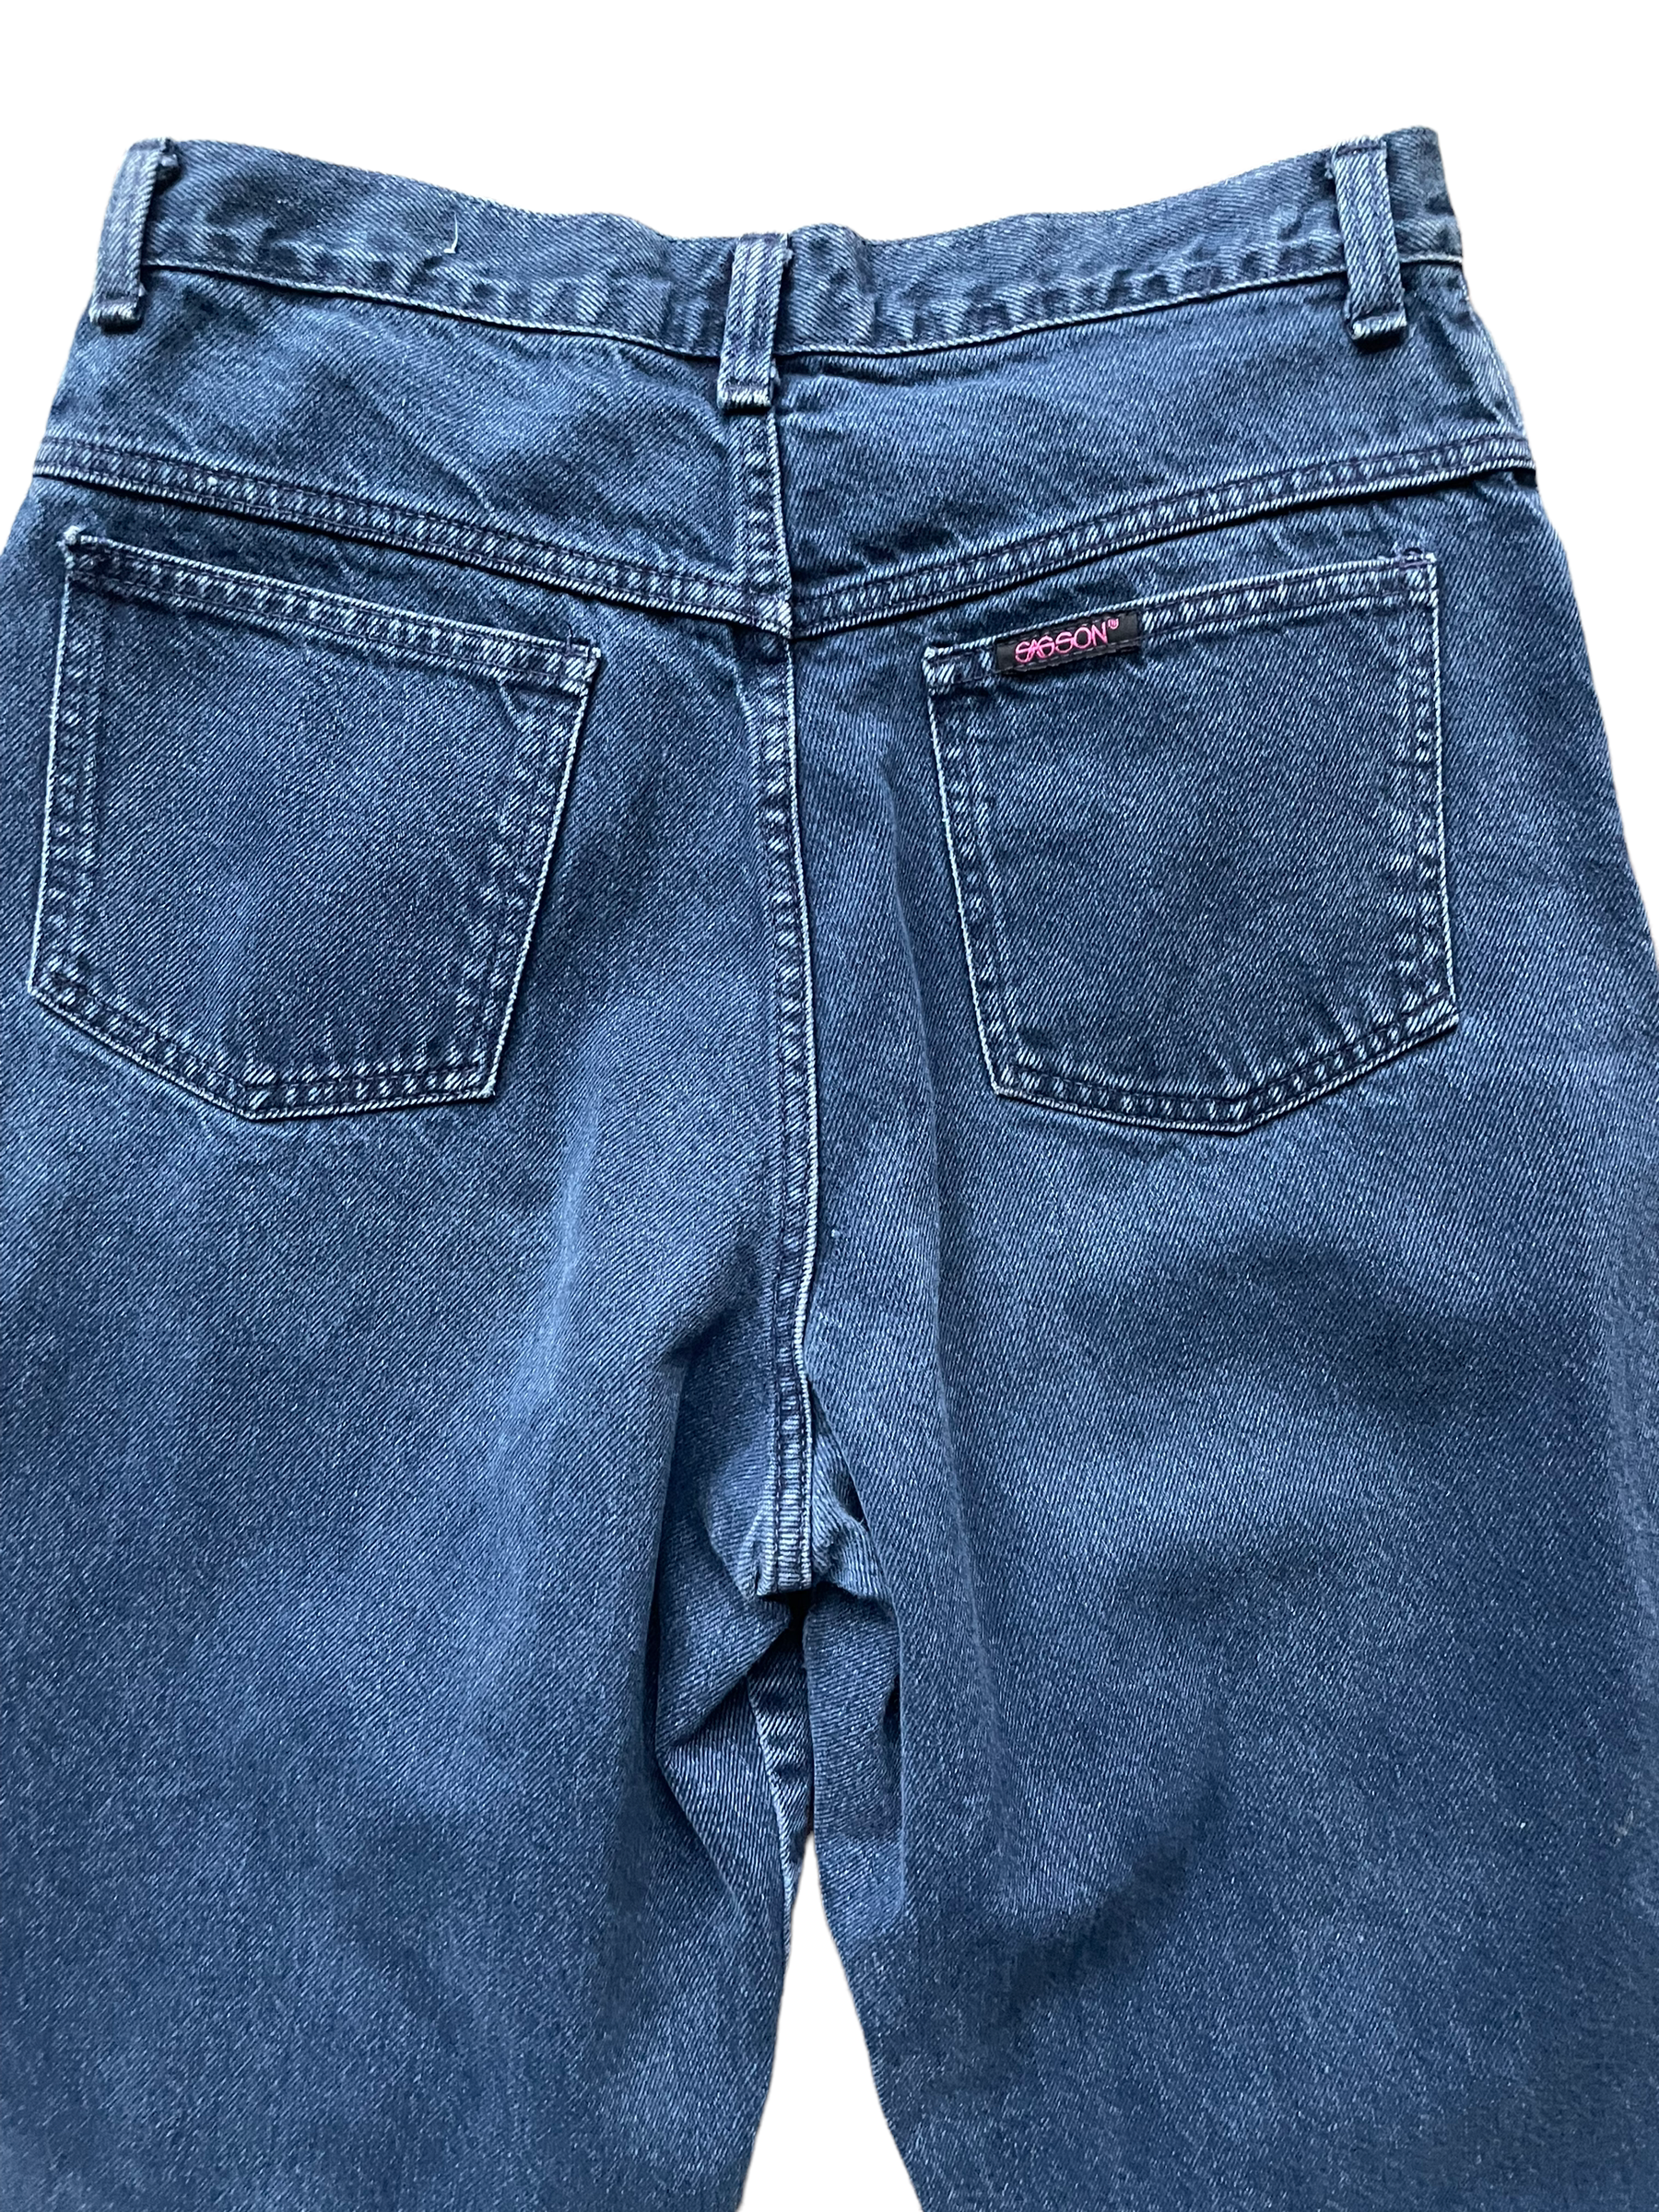 back pocket view of Vintage 1980s Sasson Ladies Jeans | Barn Owl Seattle | Vintage Ladies Jeans and Pants